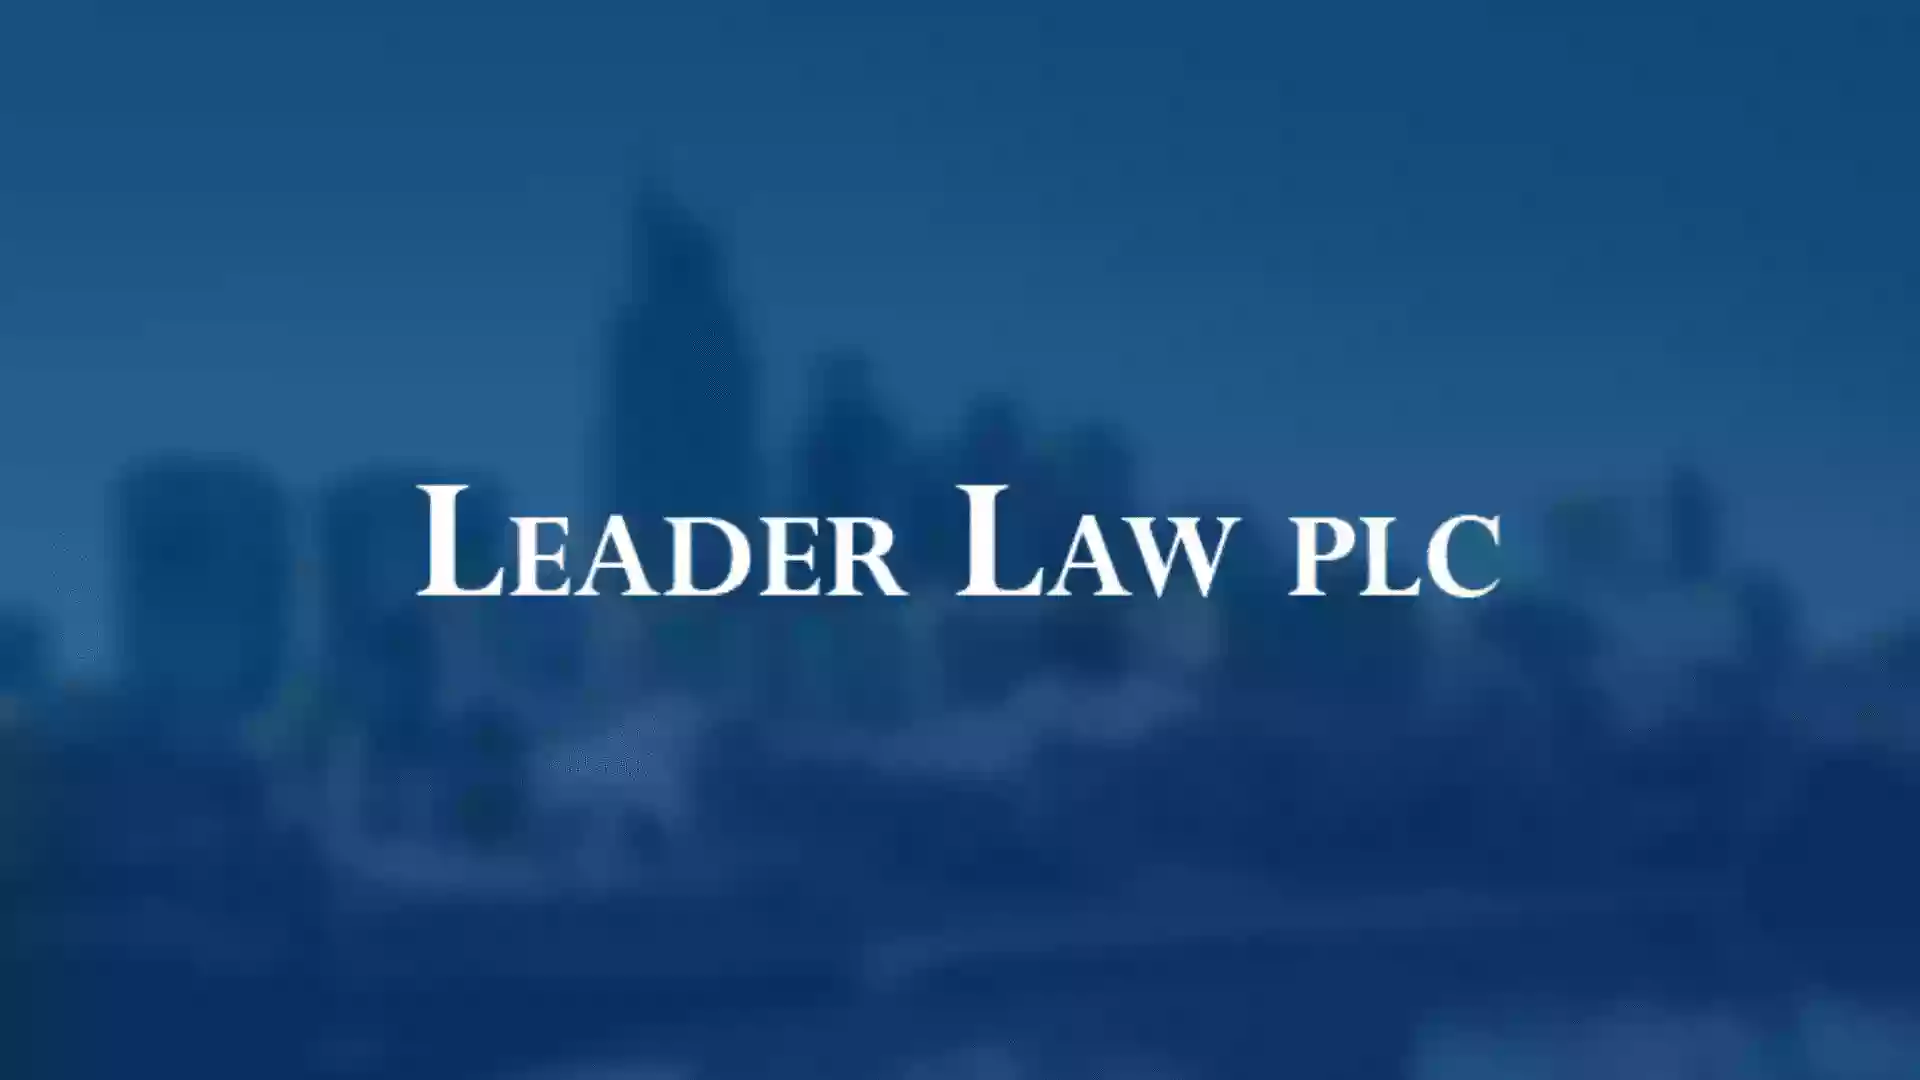 Leader Law PLC